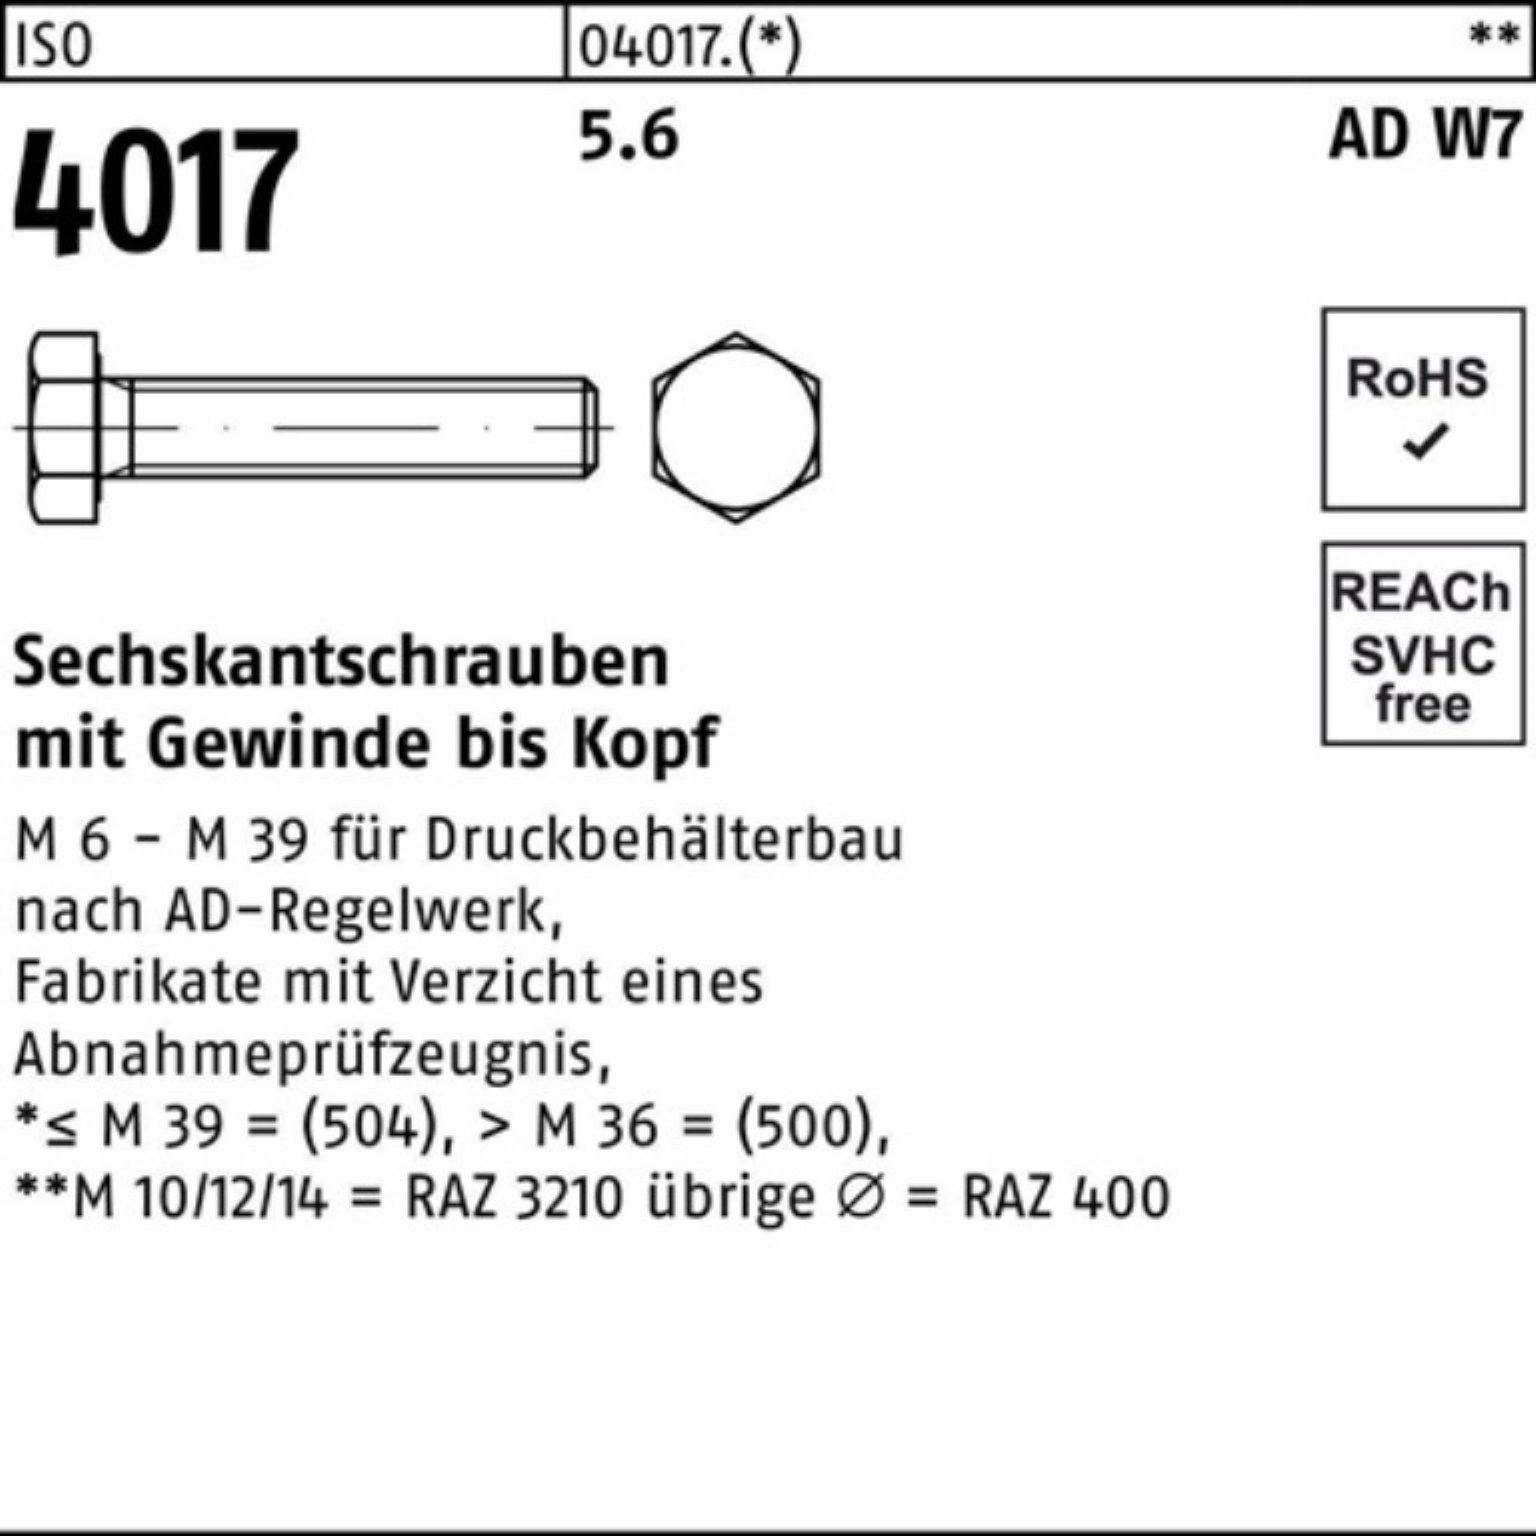 Bufab Sechskantschraube 100er Pack Sechskantschraube ISO 4017 VG M16x 100 5.6 AD W7 25 Stück